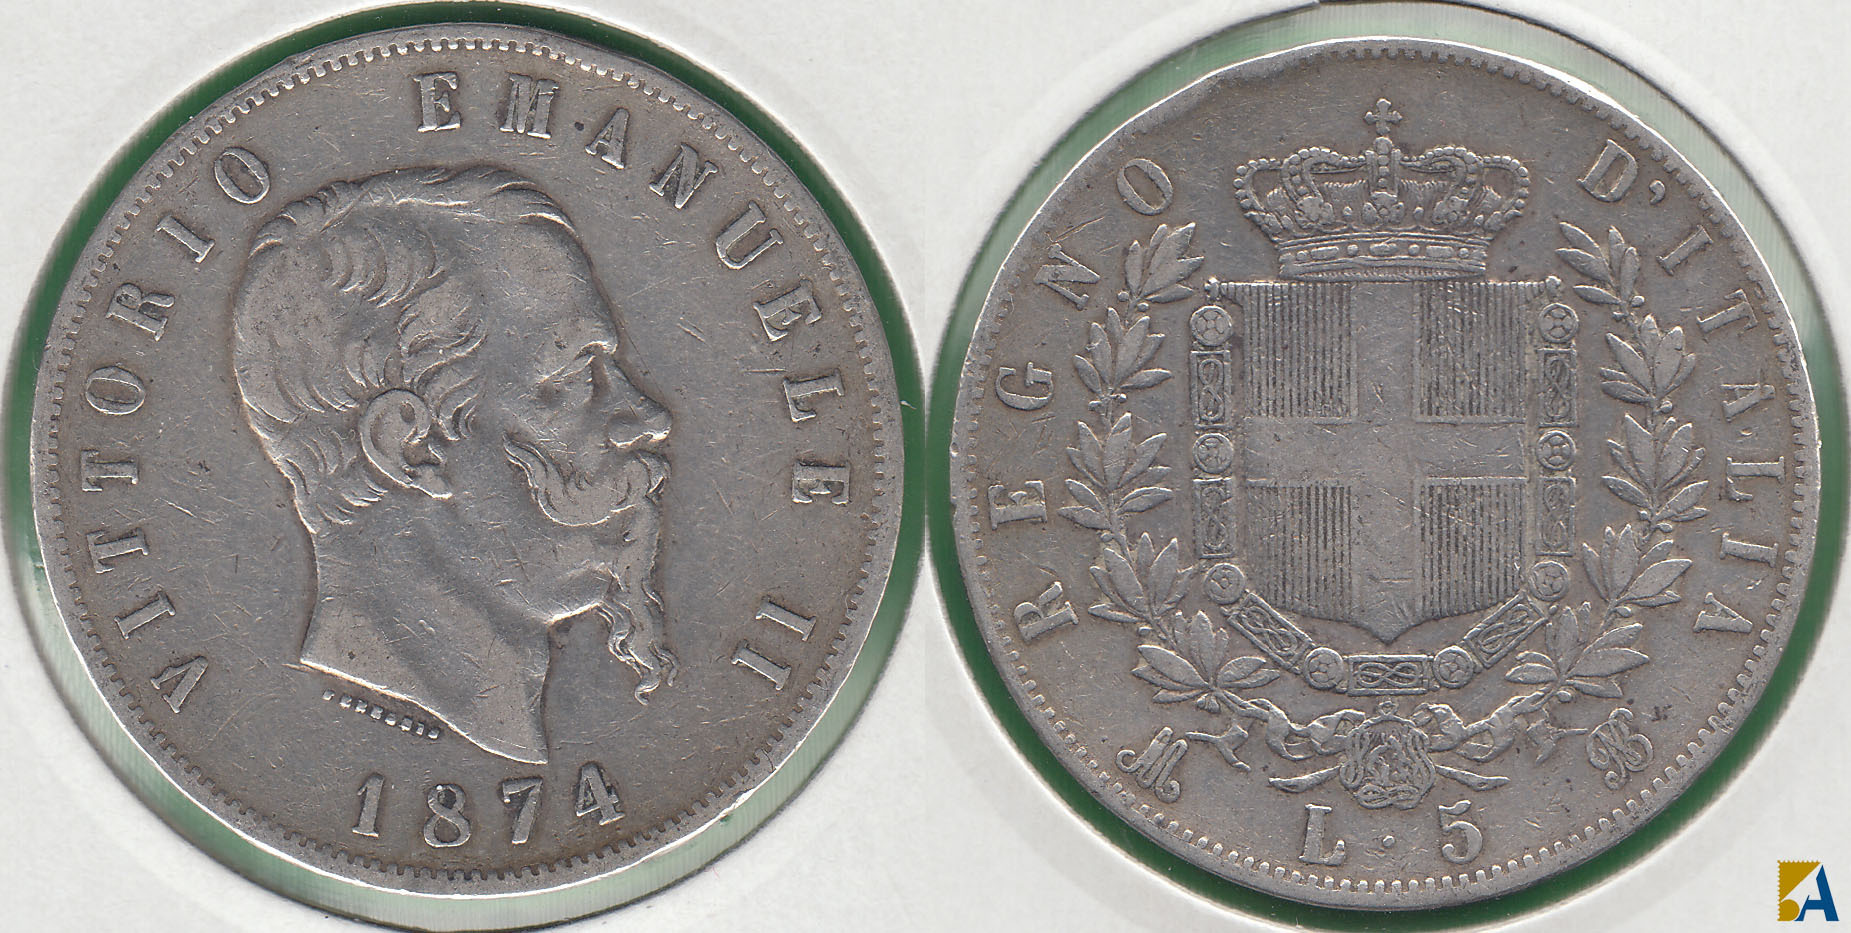 ITALIA. 5 LIRAS (LIRE) DE 1874 MBN. PLATA 0.900.